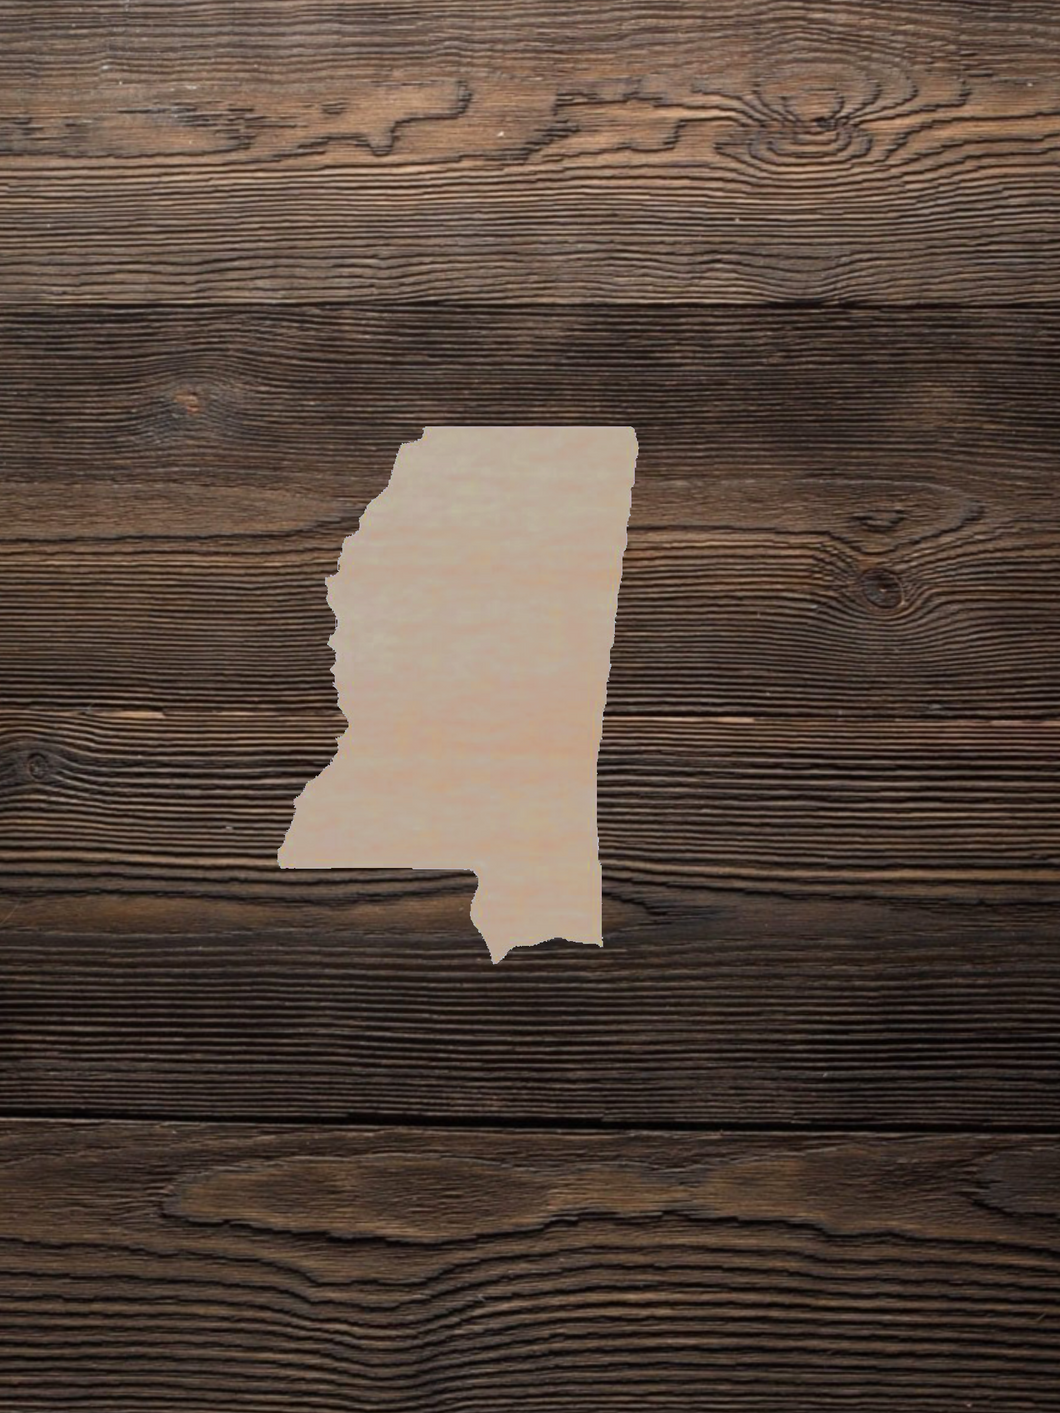 State Of Mississippi